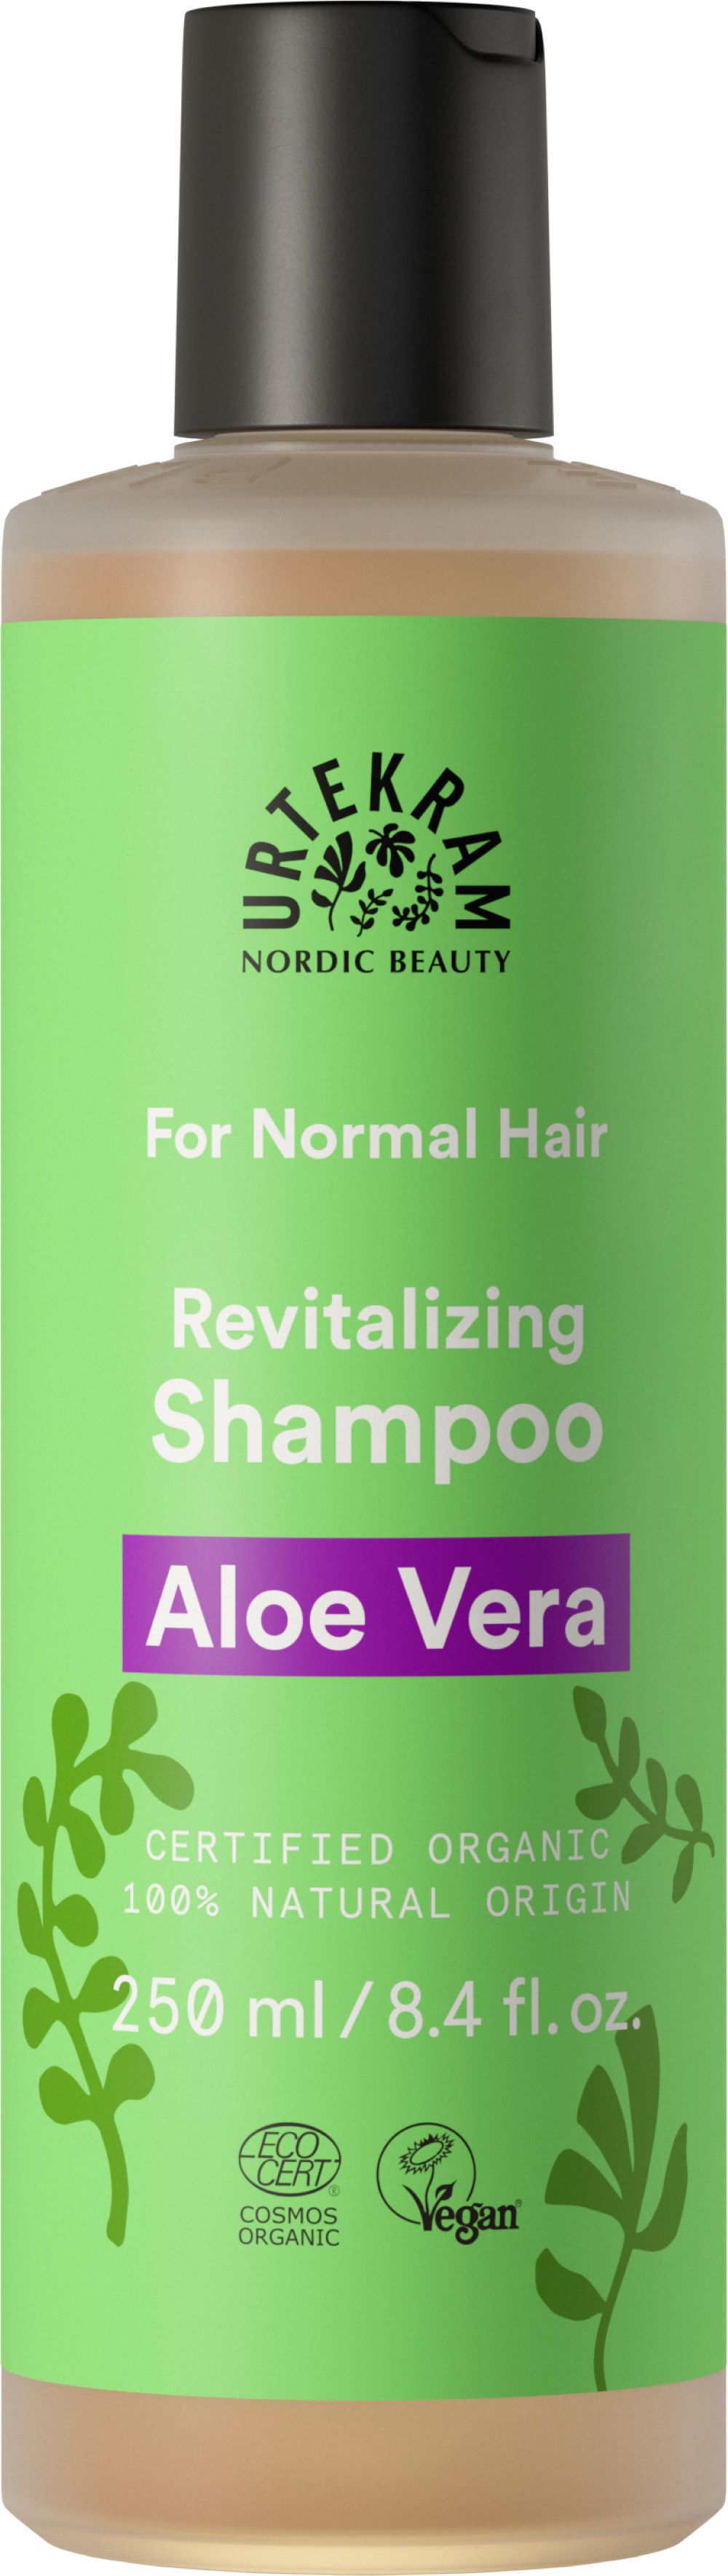 Org. Aloe Vera Shampoo, Normal